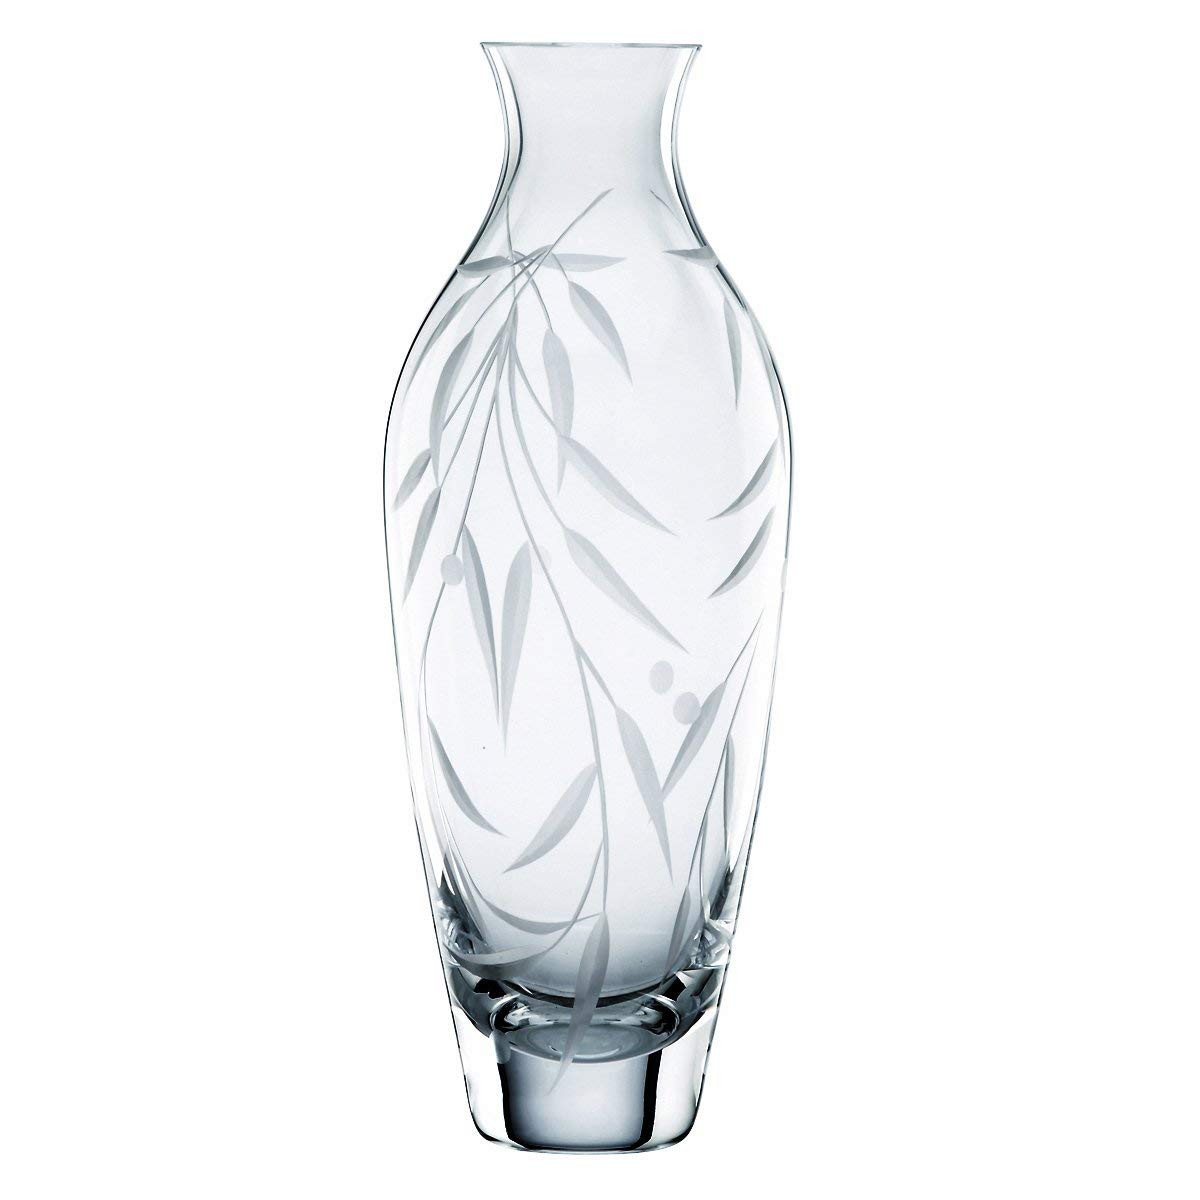 waterford lismore flared vase of amazon com lenox opal innocence crystal bud vase home kitchen regarding 610apullewl sl1200